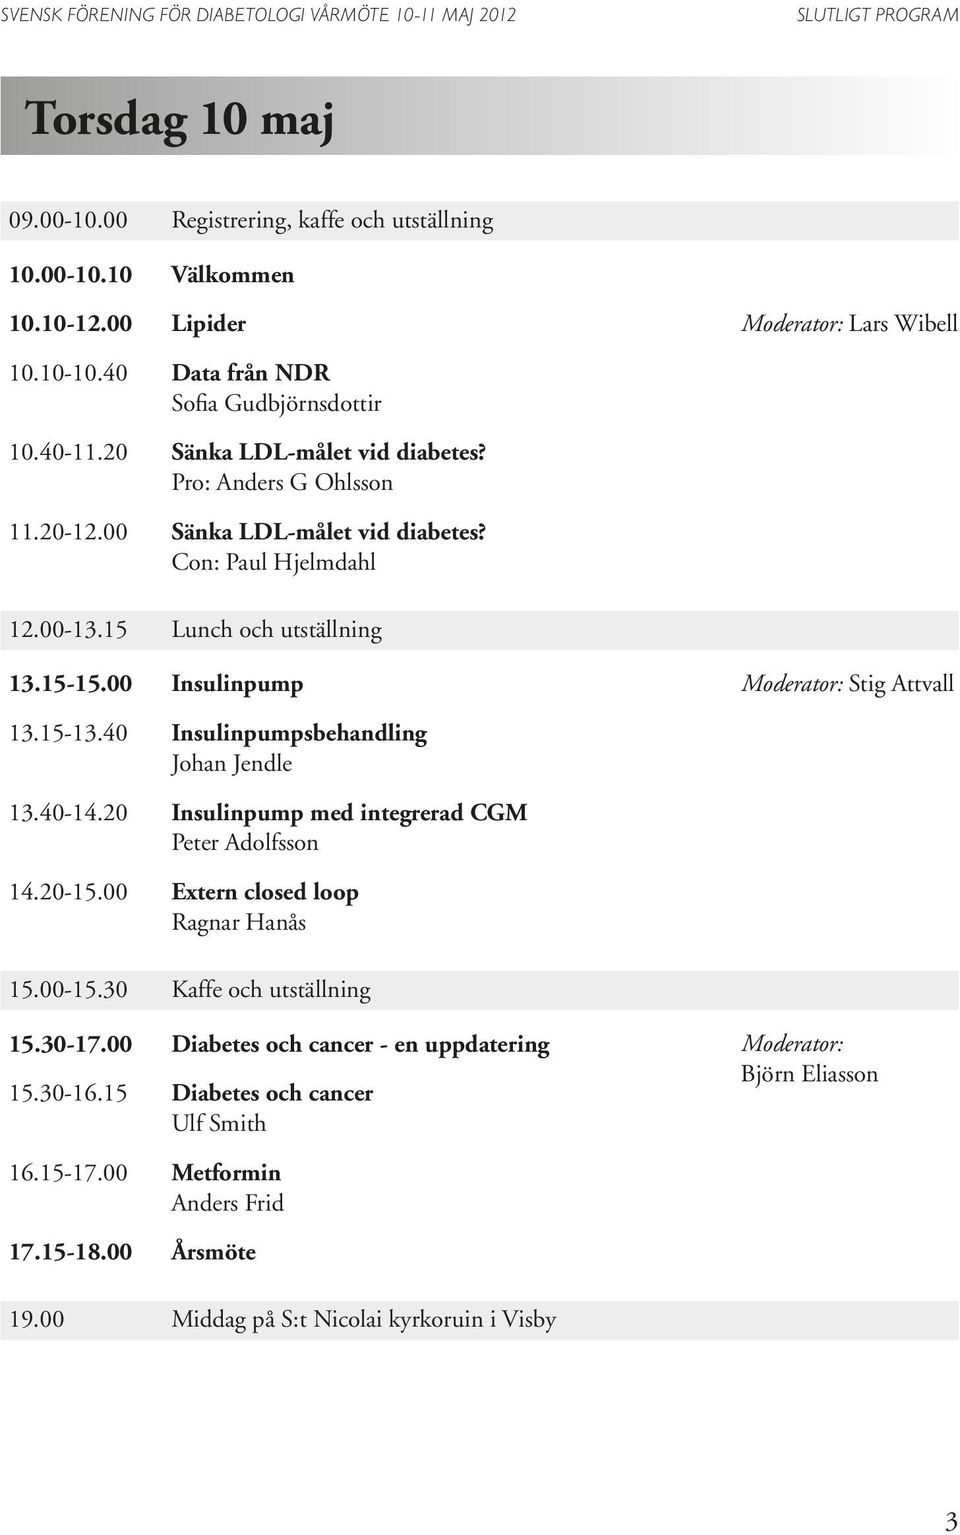 00 Insulinpump Moderator: Stig Attvall 13.15-13.40 Insulinpumpsbehandling Johan Jendle 13.40-14.20 Insulinpump med integrerad CGM Peter Adolfsson 14.20-15.00 Extern closed loop Ragnar Hanås 15.